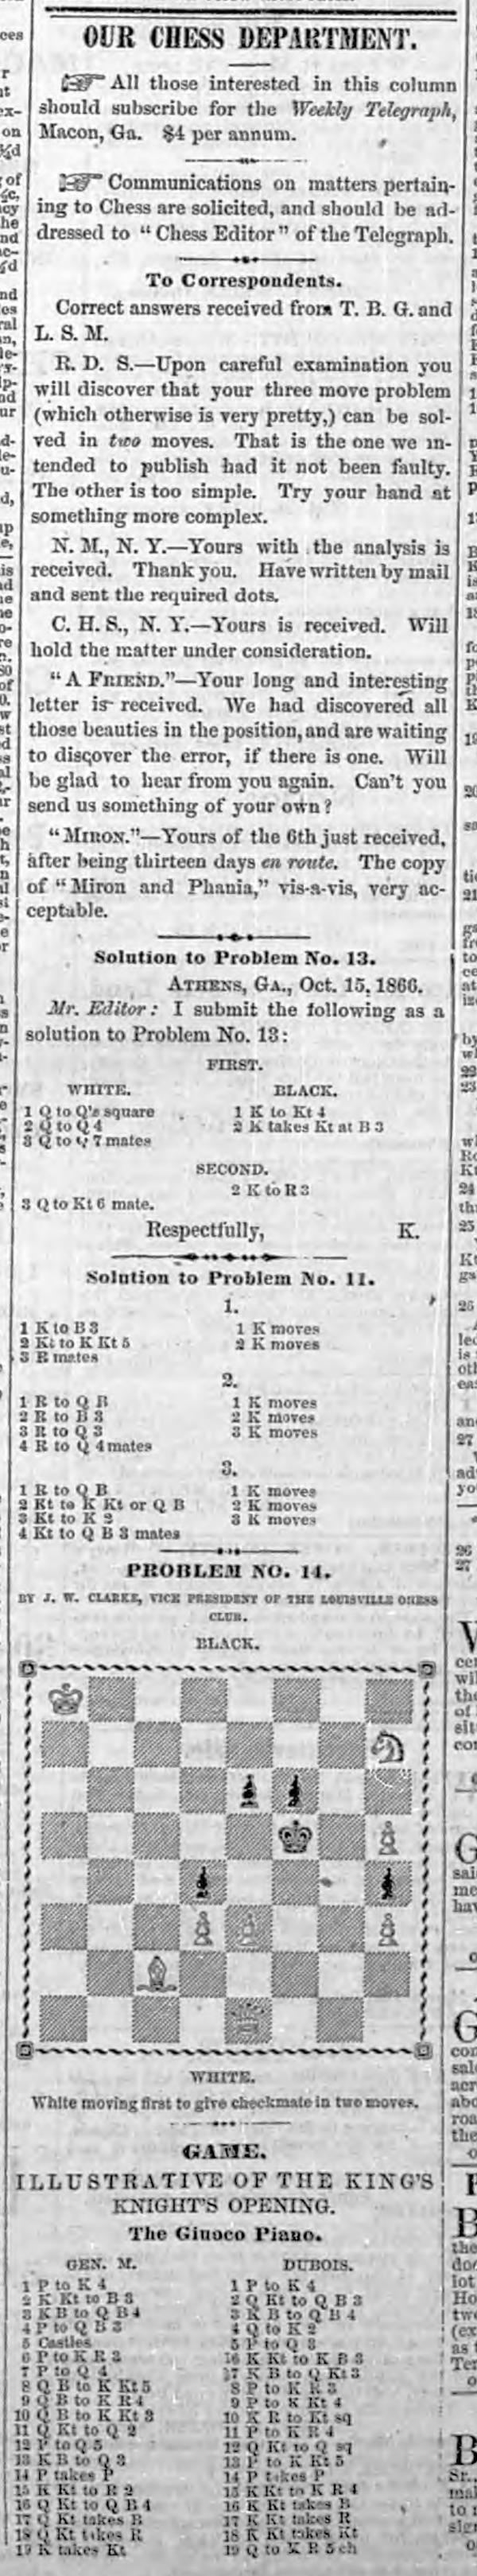 1866.10.22-01 Macon Georgia Weekly Telegraph.jpg